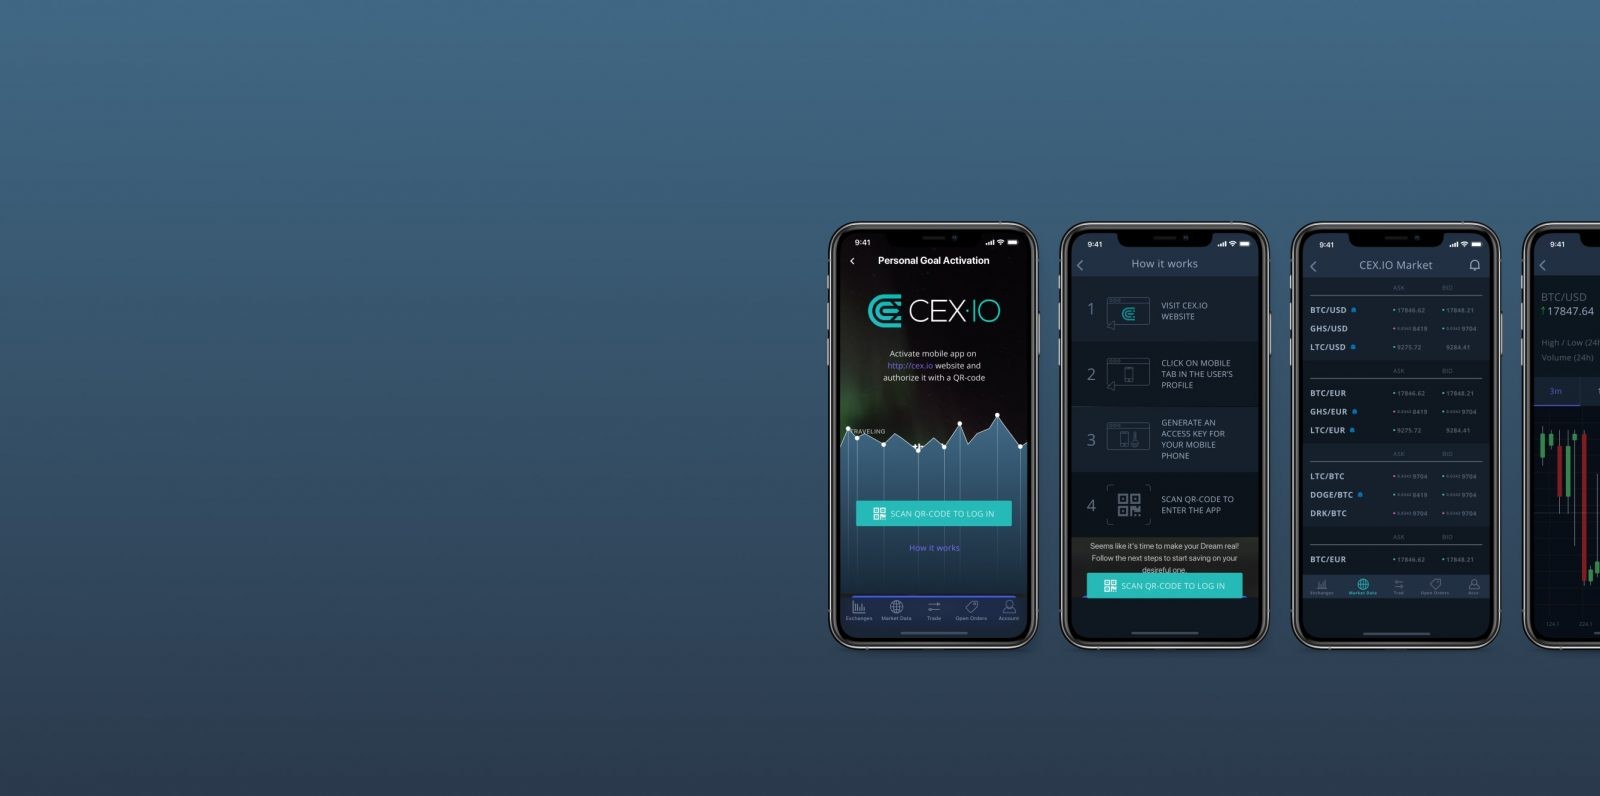 CEX.IO — Bitcoin and crypto exchange